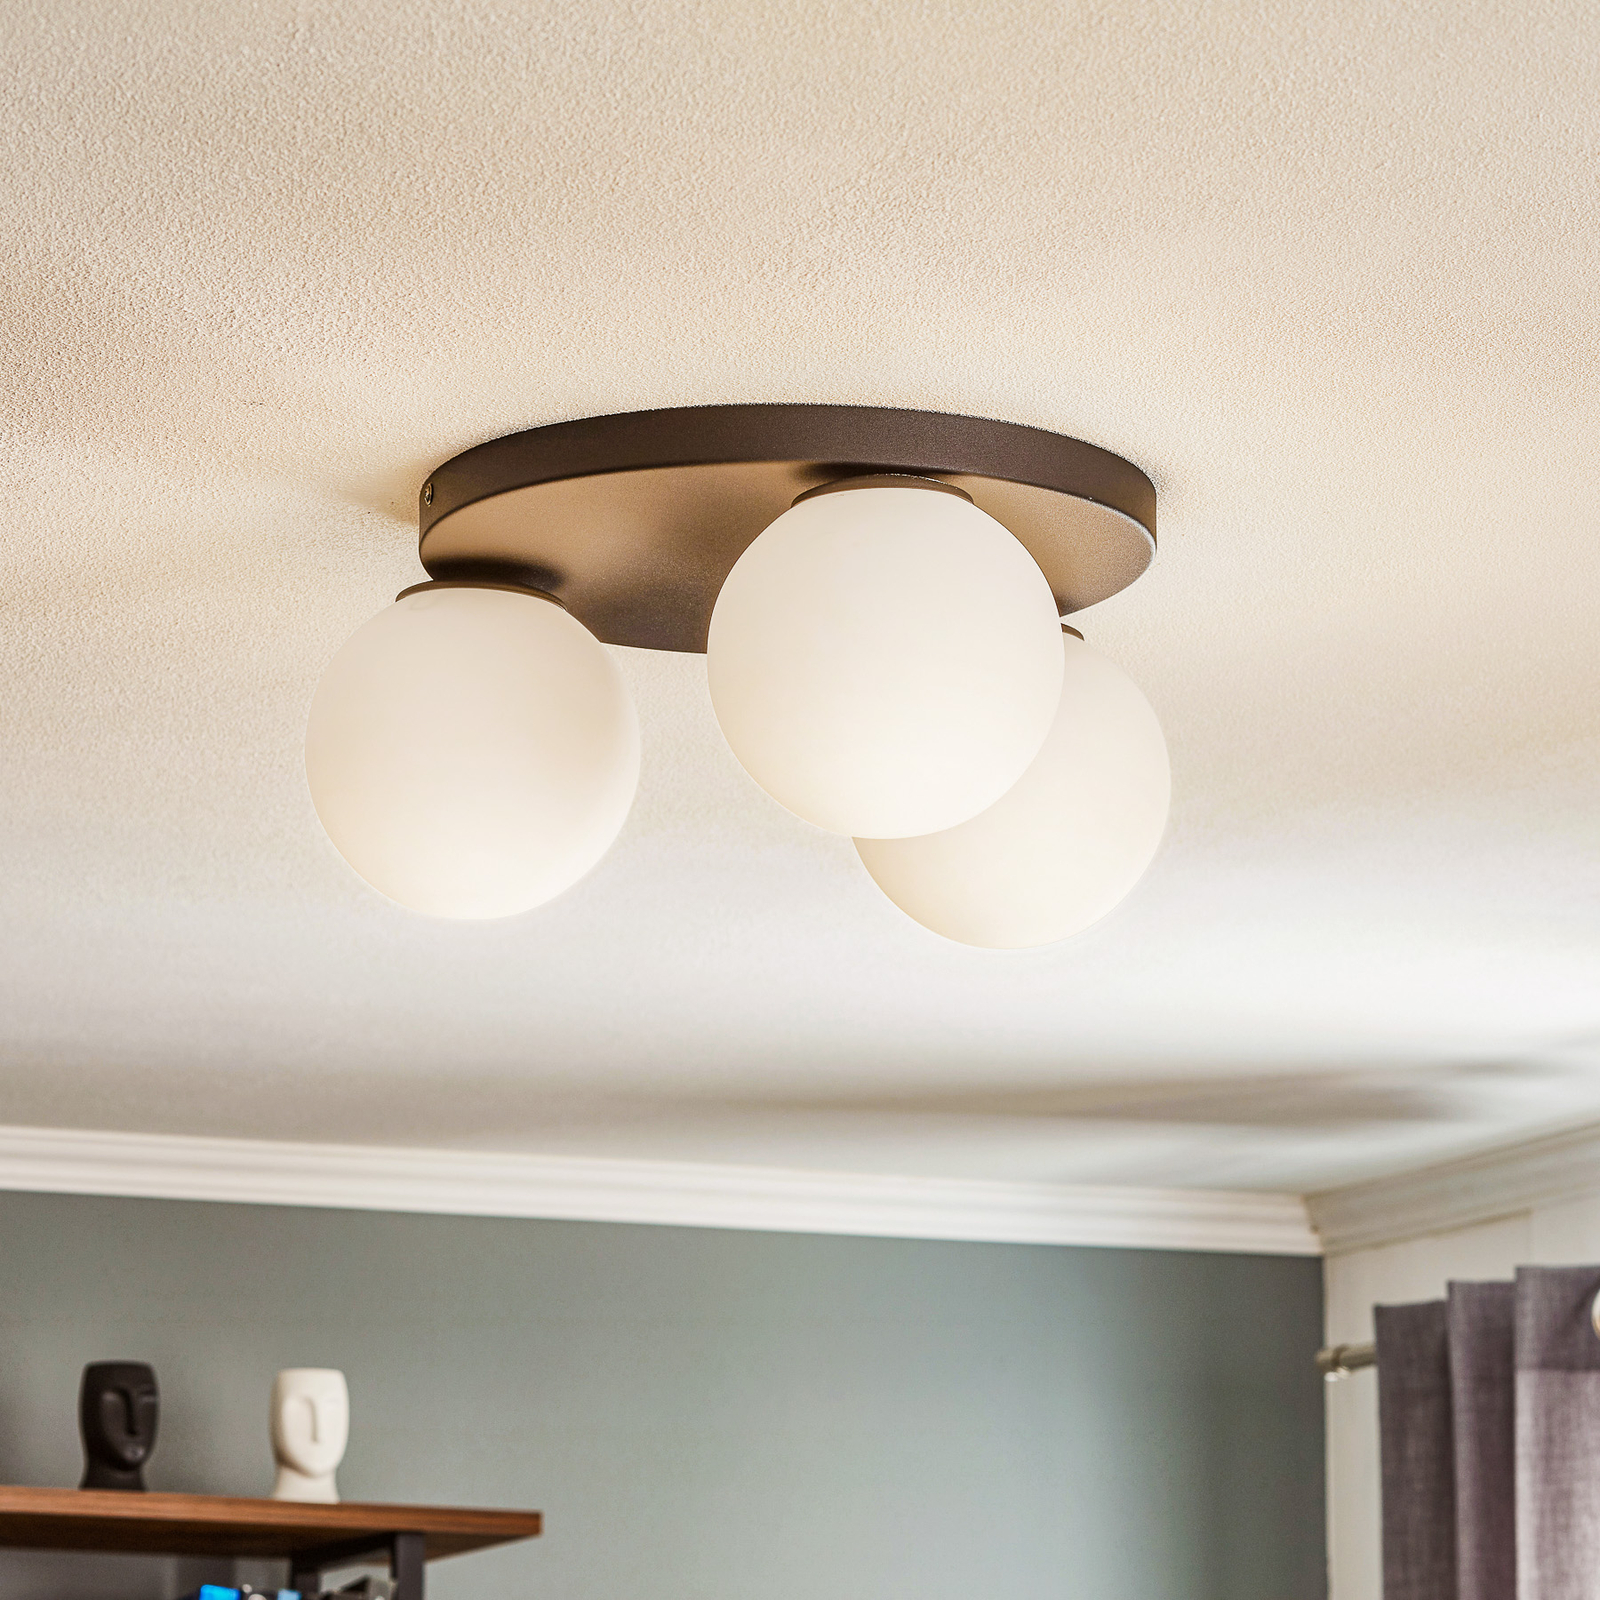 Maxi ceiling light, round, 3-bulb